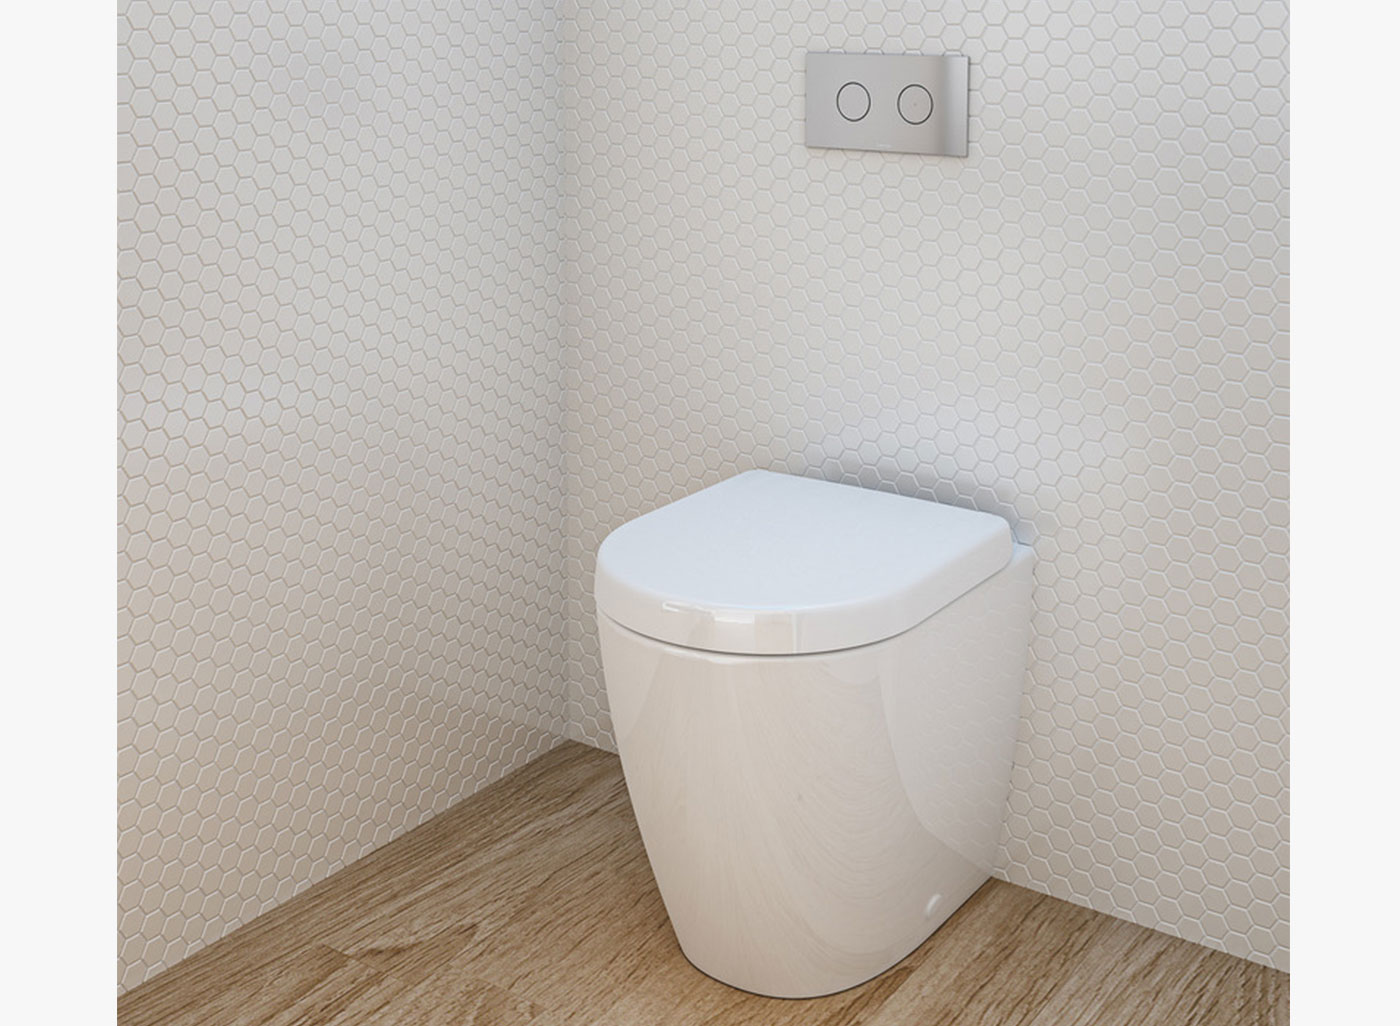 our Urbane range achieve universal design to fit a range of bathroom spaces. Clever craftsmanship ensures minimal maintenance